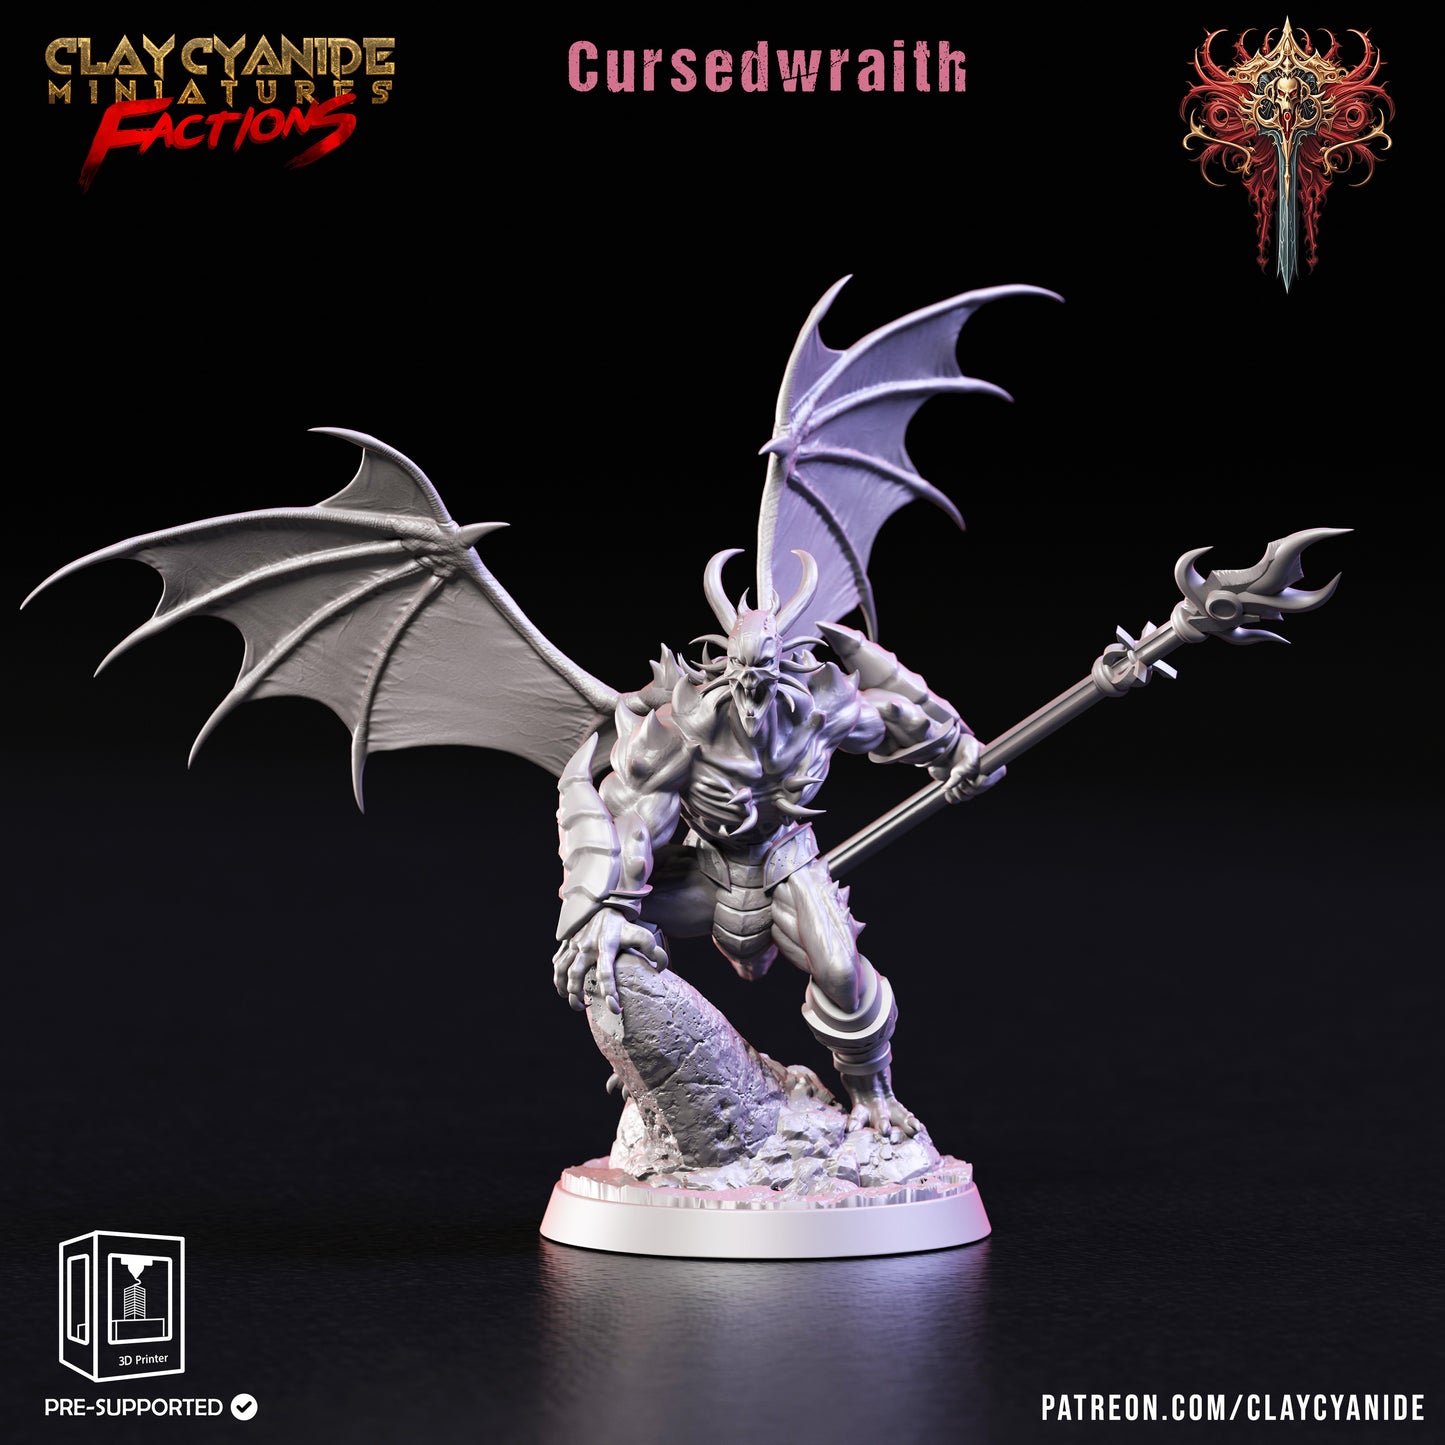 Cursedwraith